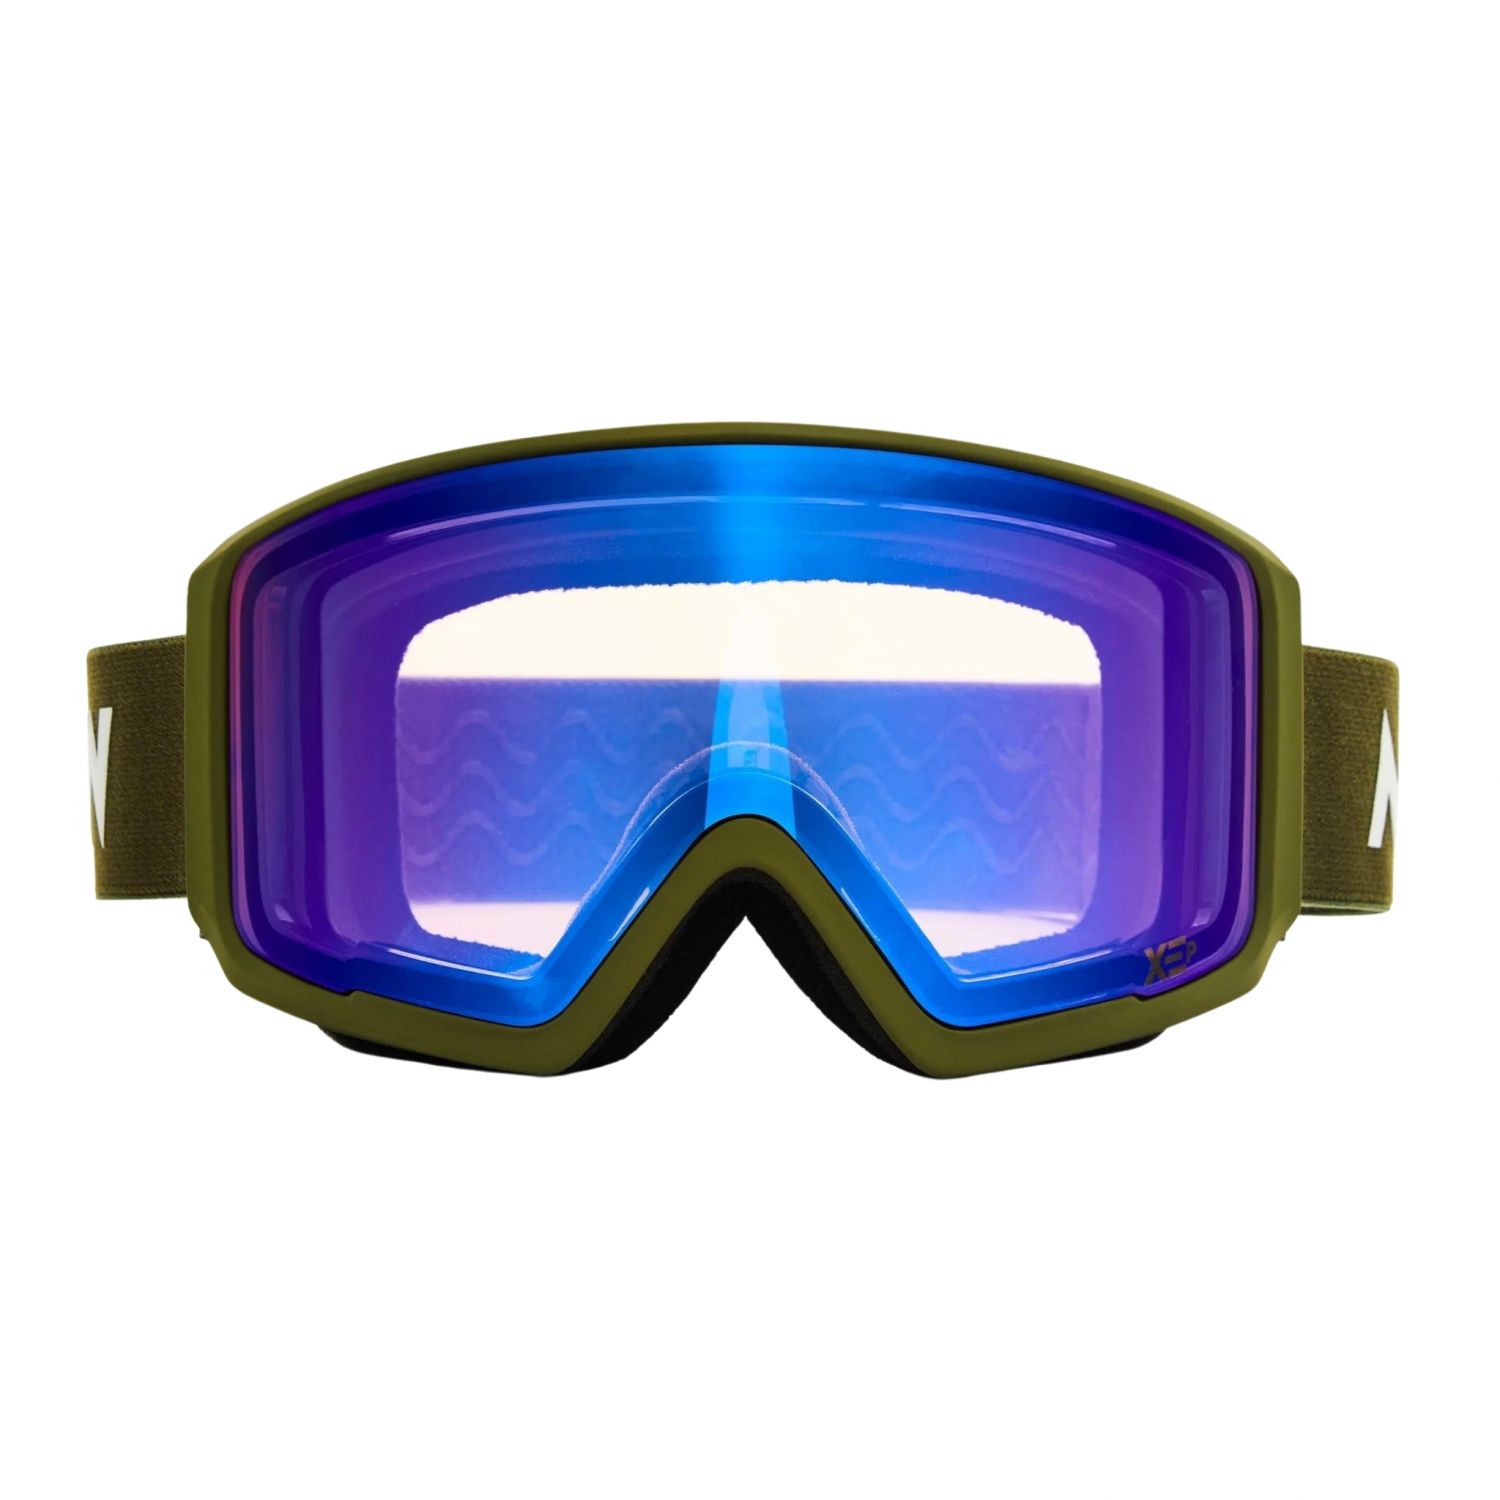 MessyWeekend Flip XEp, ski bril, groen